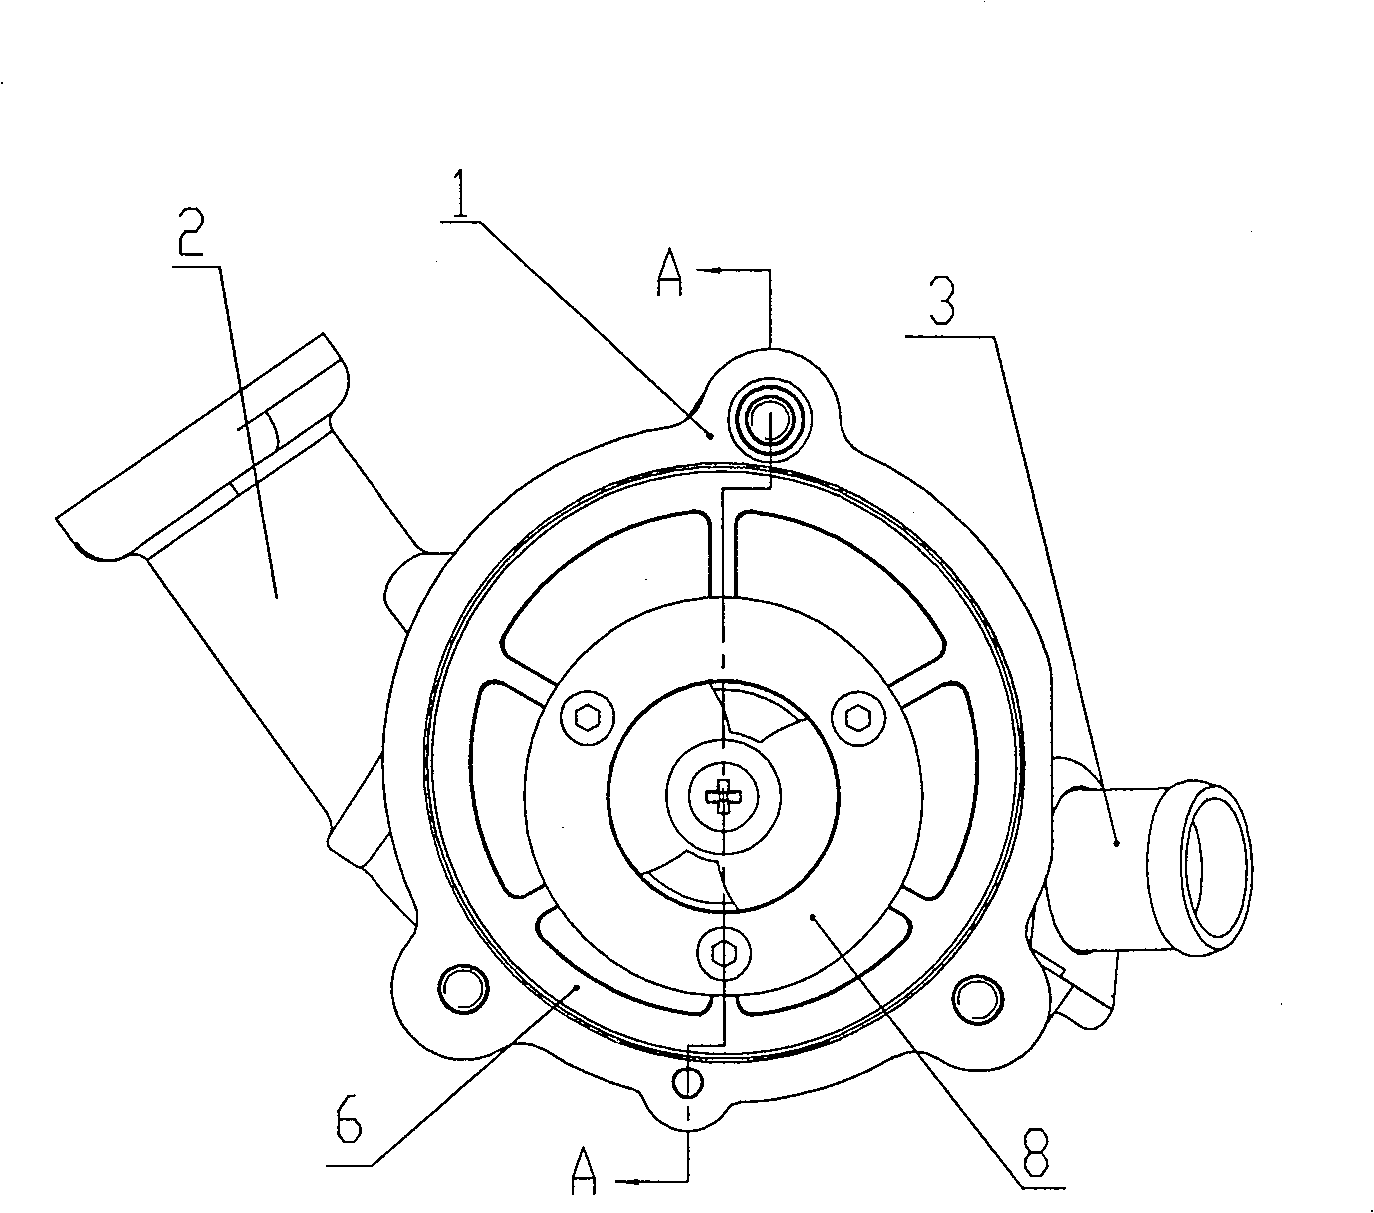 Engine mechanical pressurizing apparatus